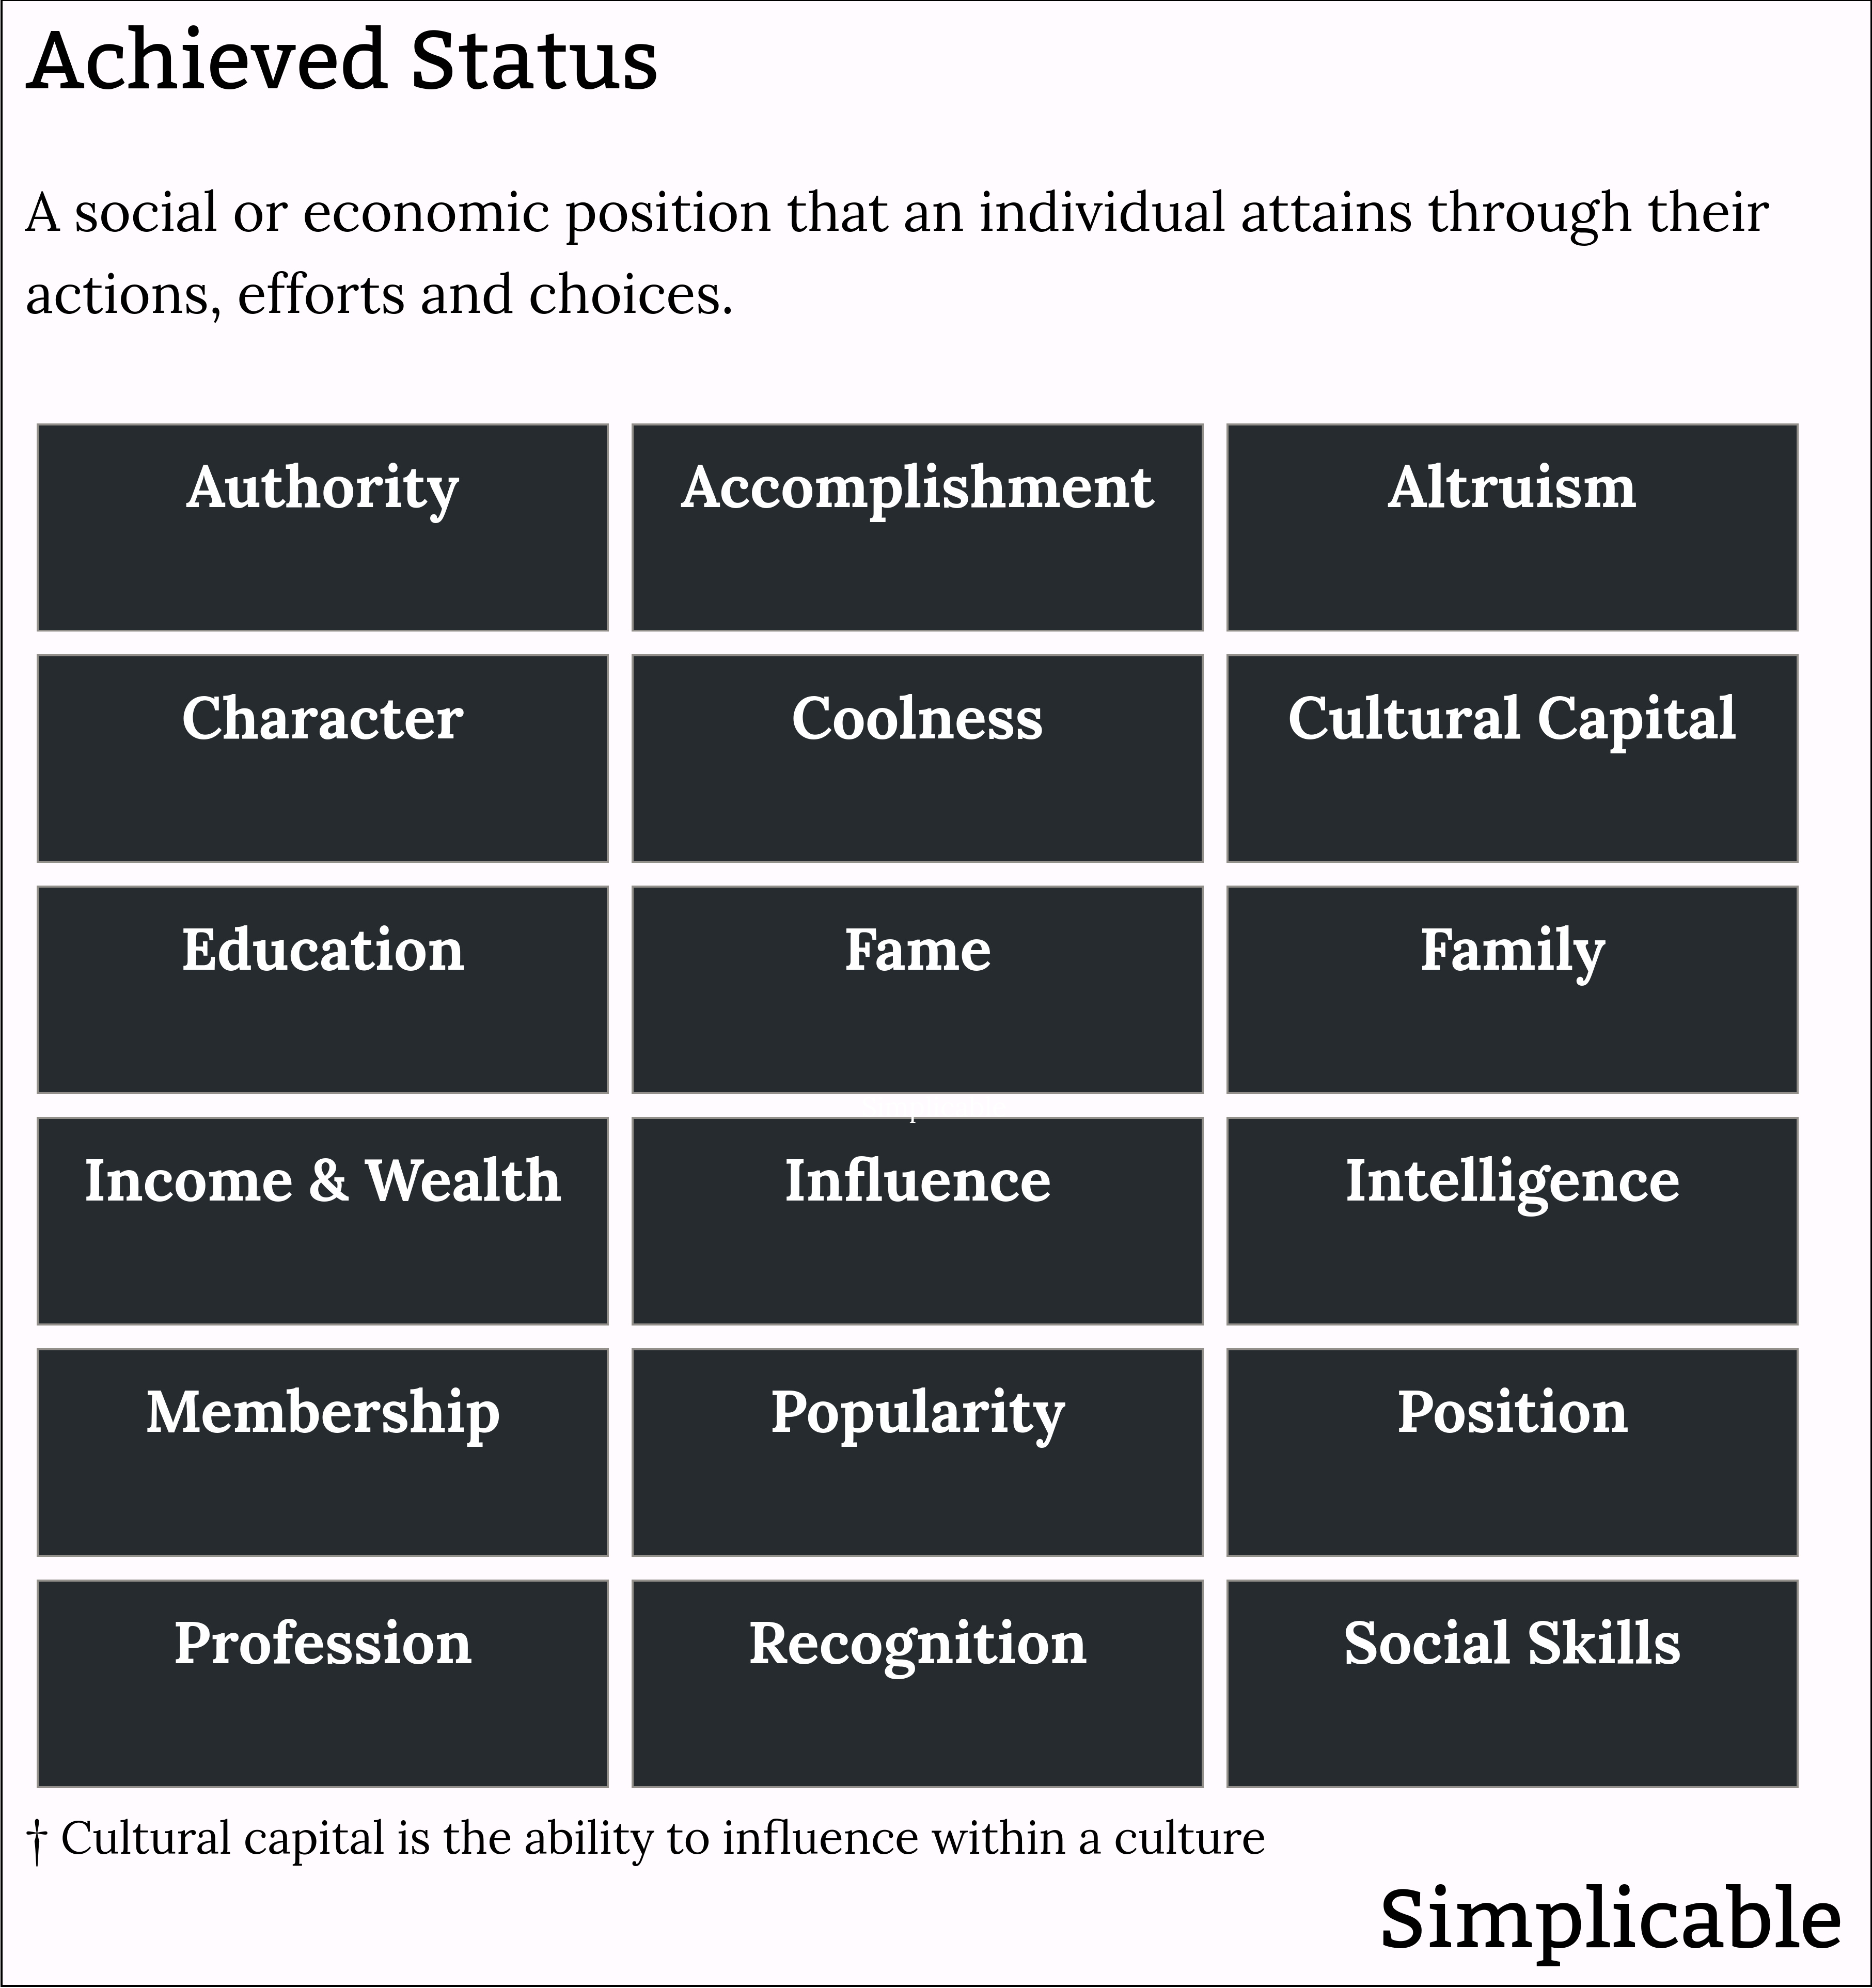 types of achieved status